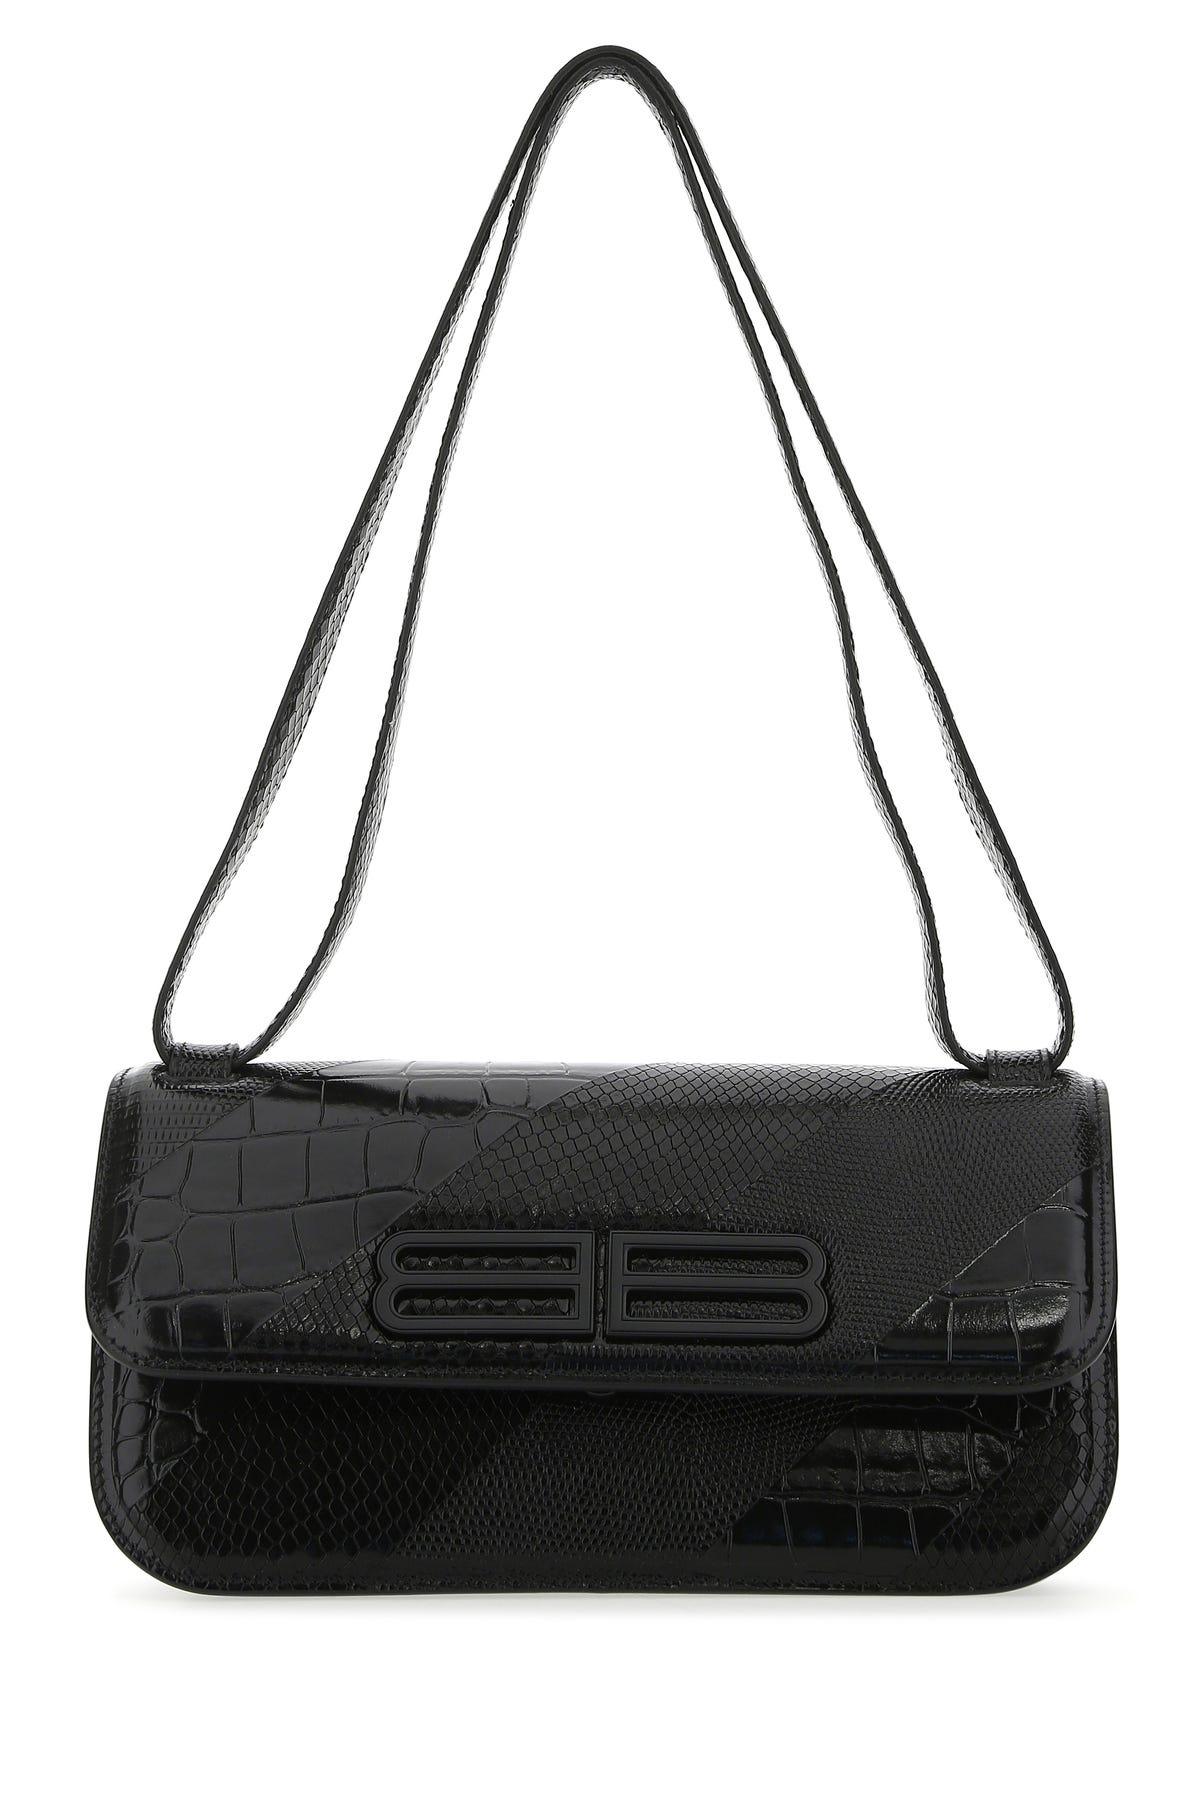 Balenciaga XS Gossip BB Logo Leather Shoulder Chain Bag Black/Gold